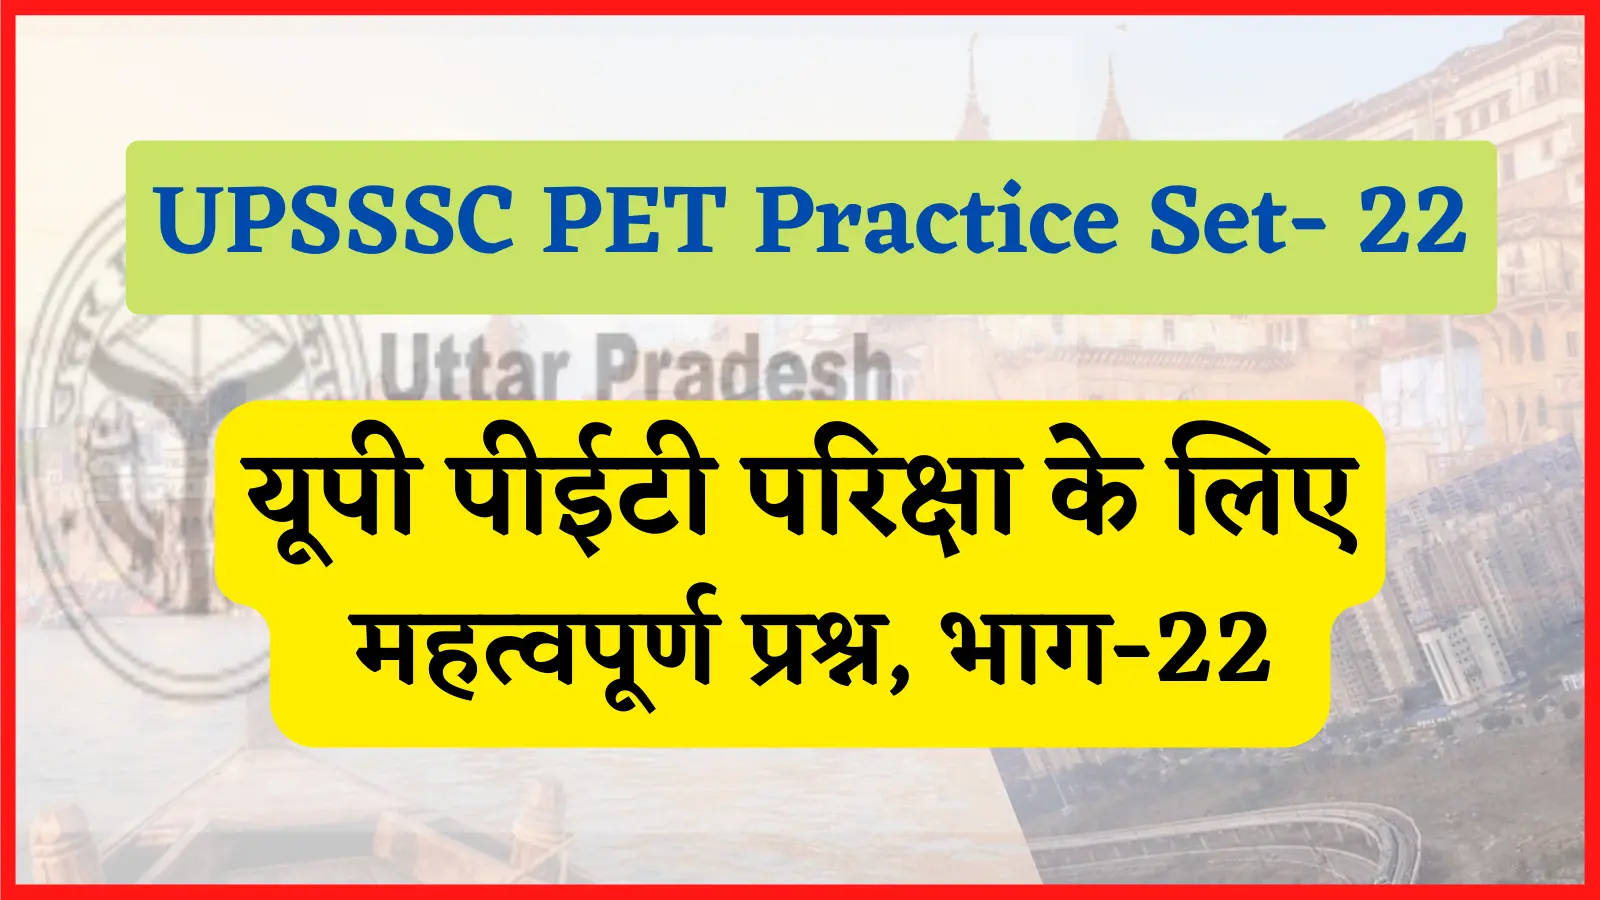 UPSSSC PET Practice Set- 22 